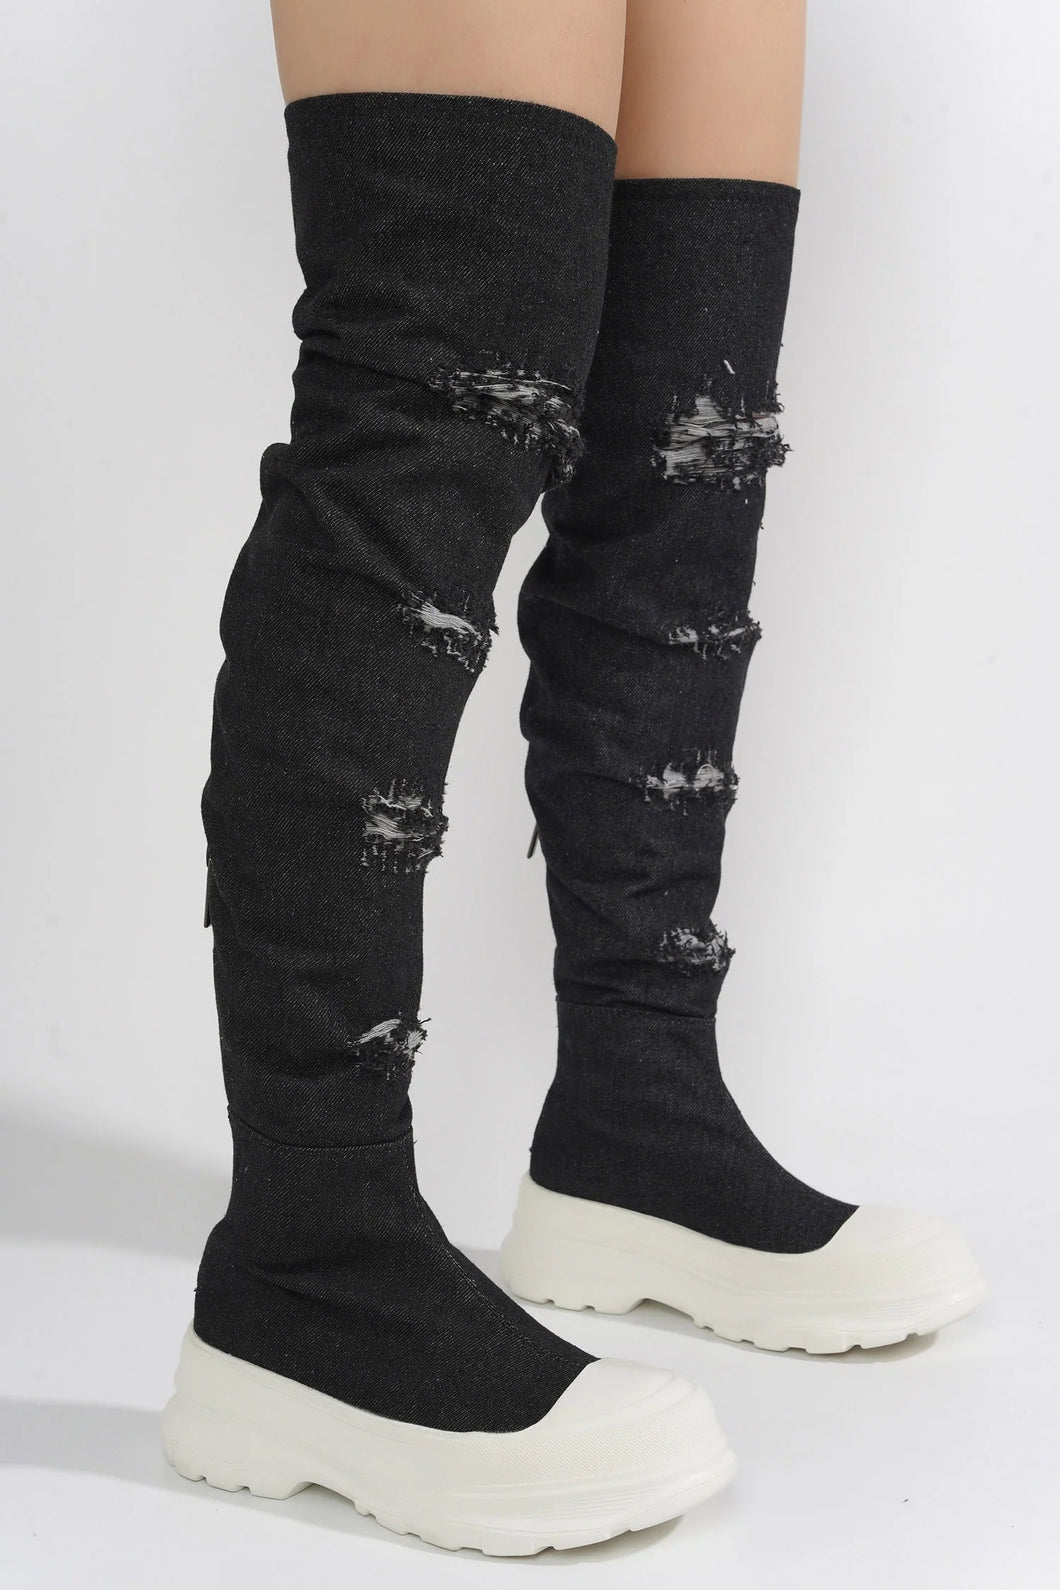 Black Fashion Long Denim Boots